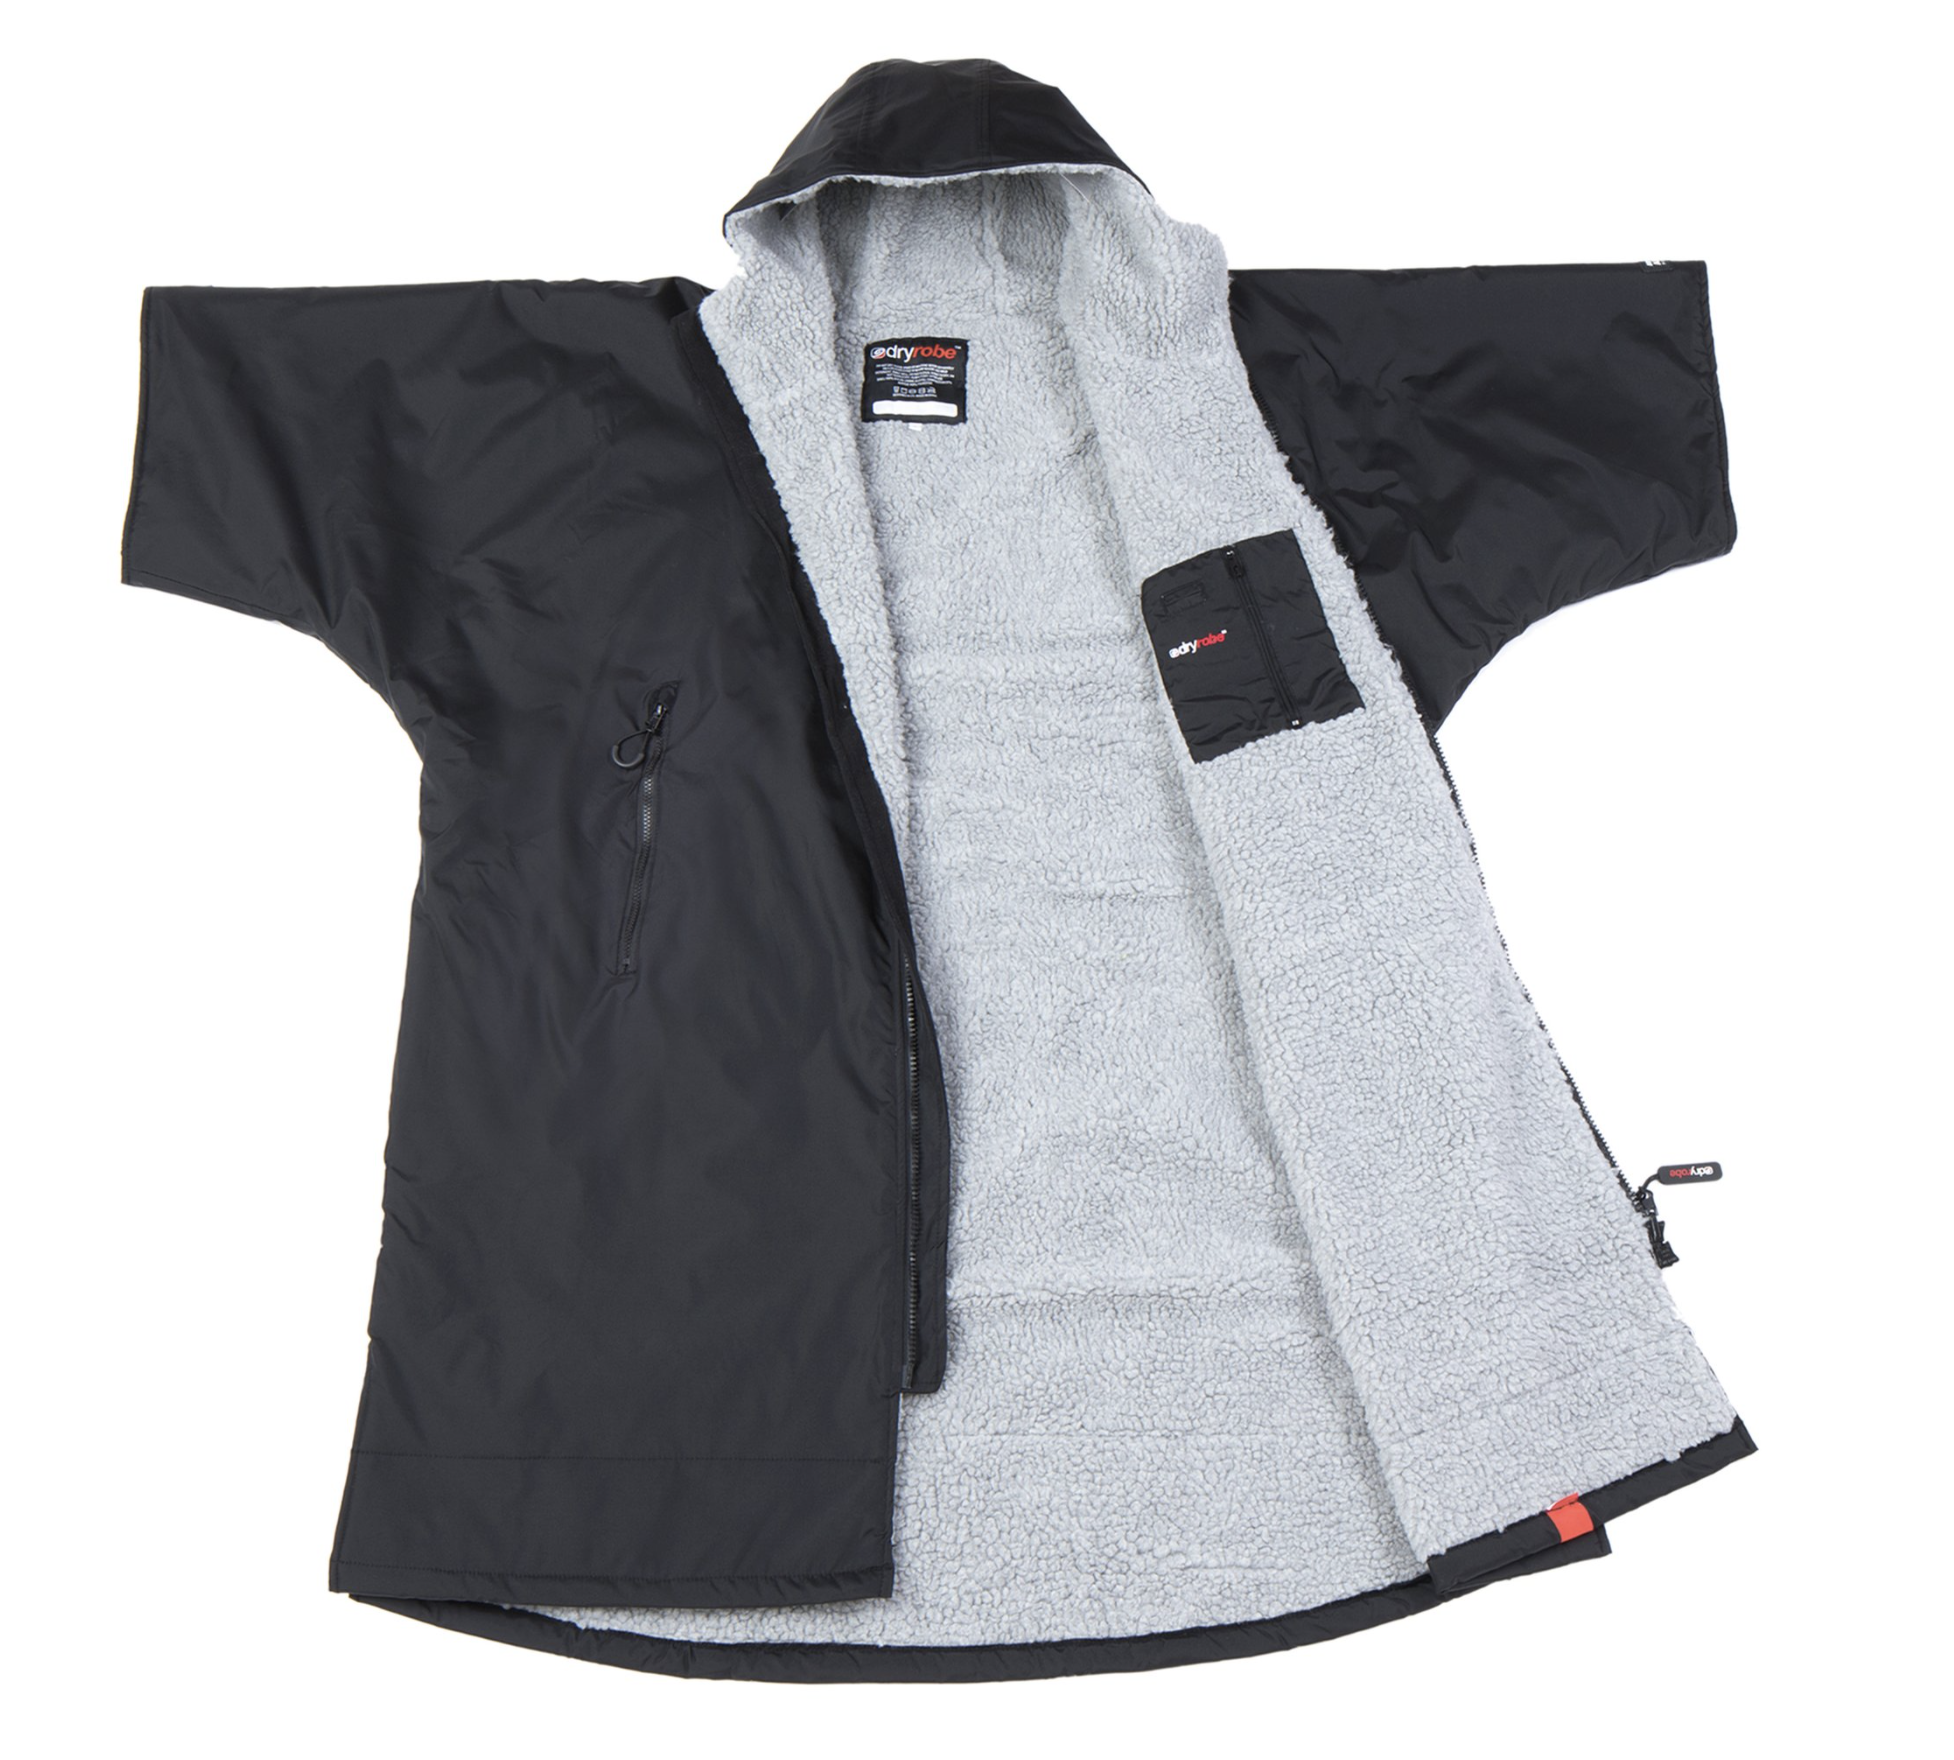 dryrobe short sleeve - grey/black